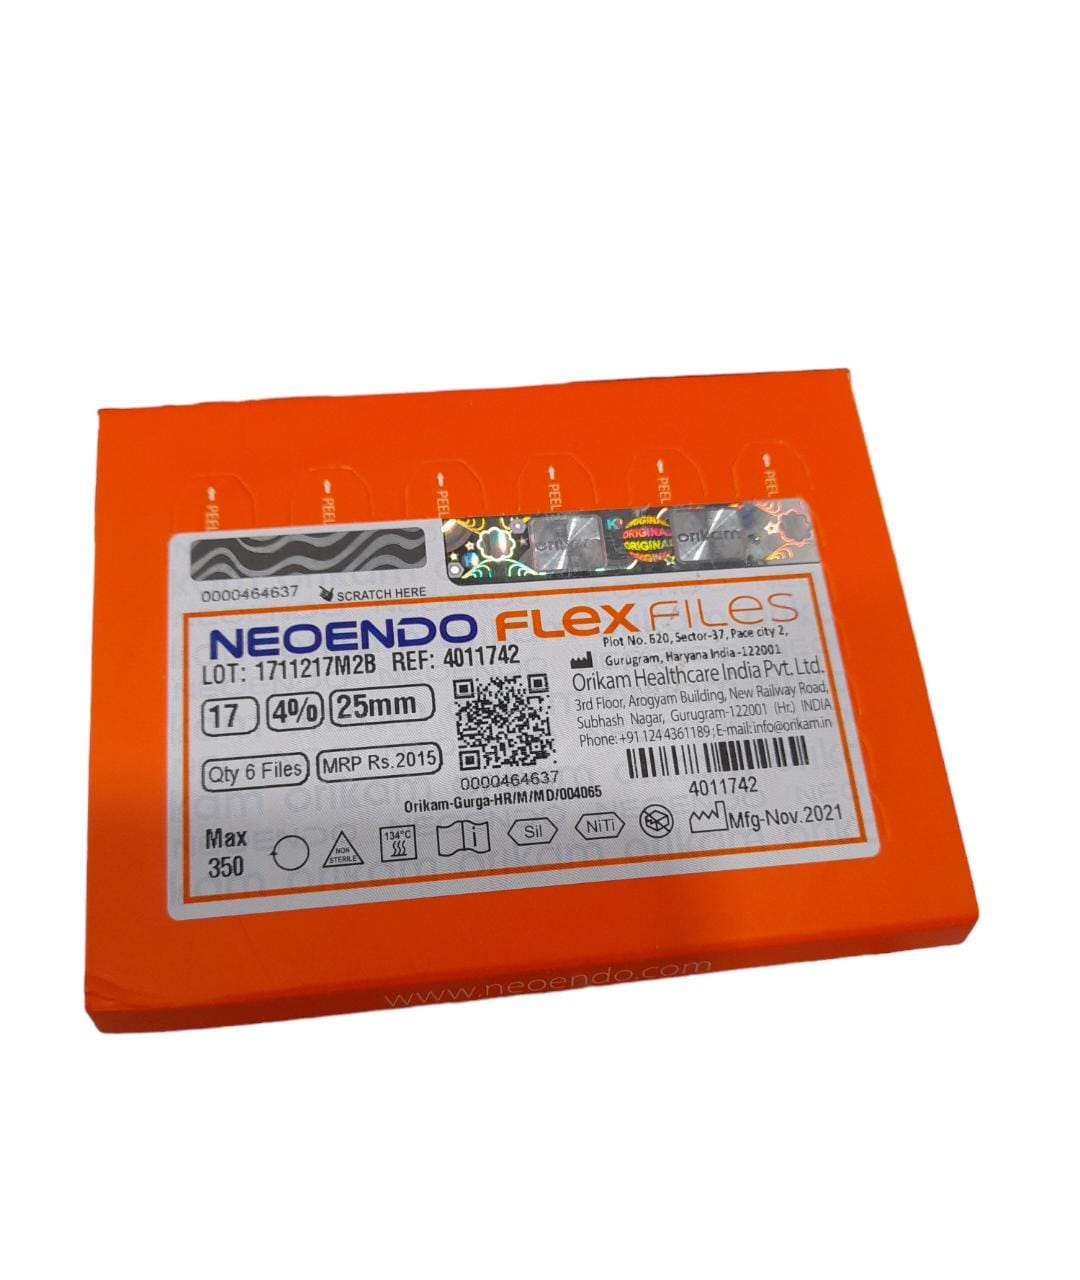 Neoendo Flex Files 25mm